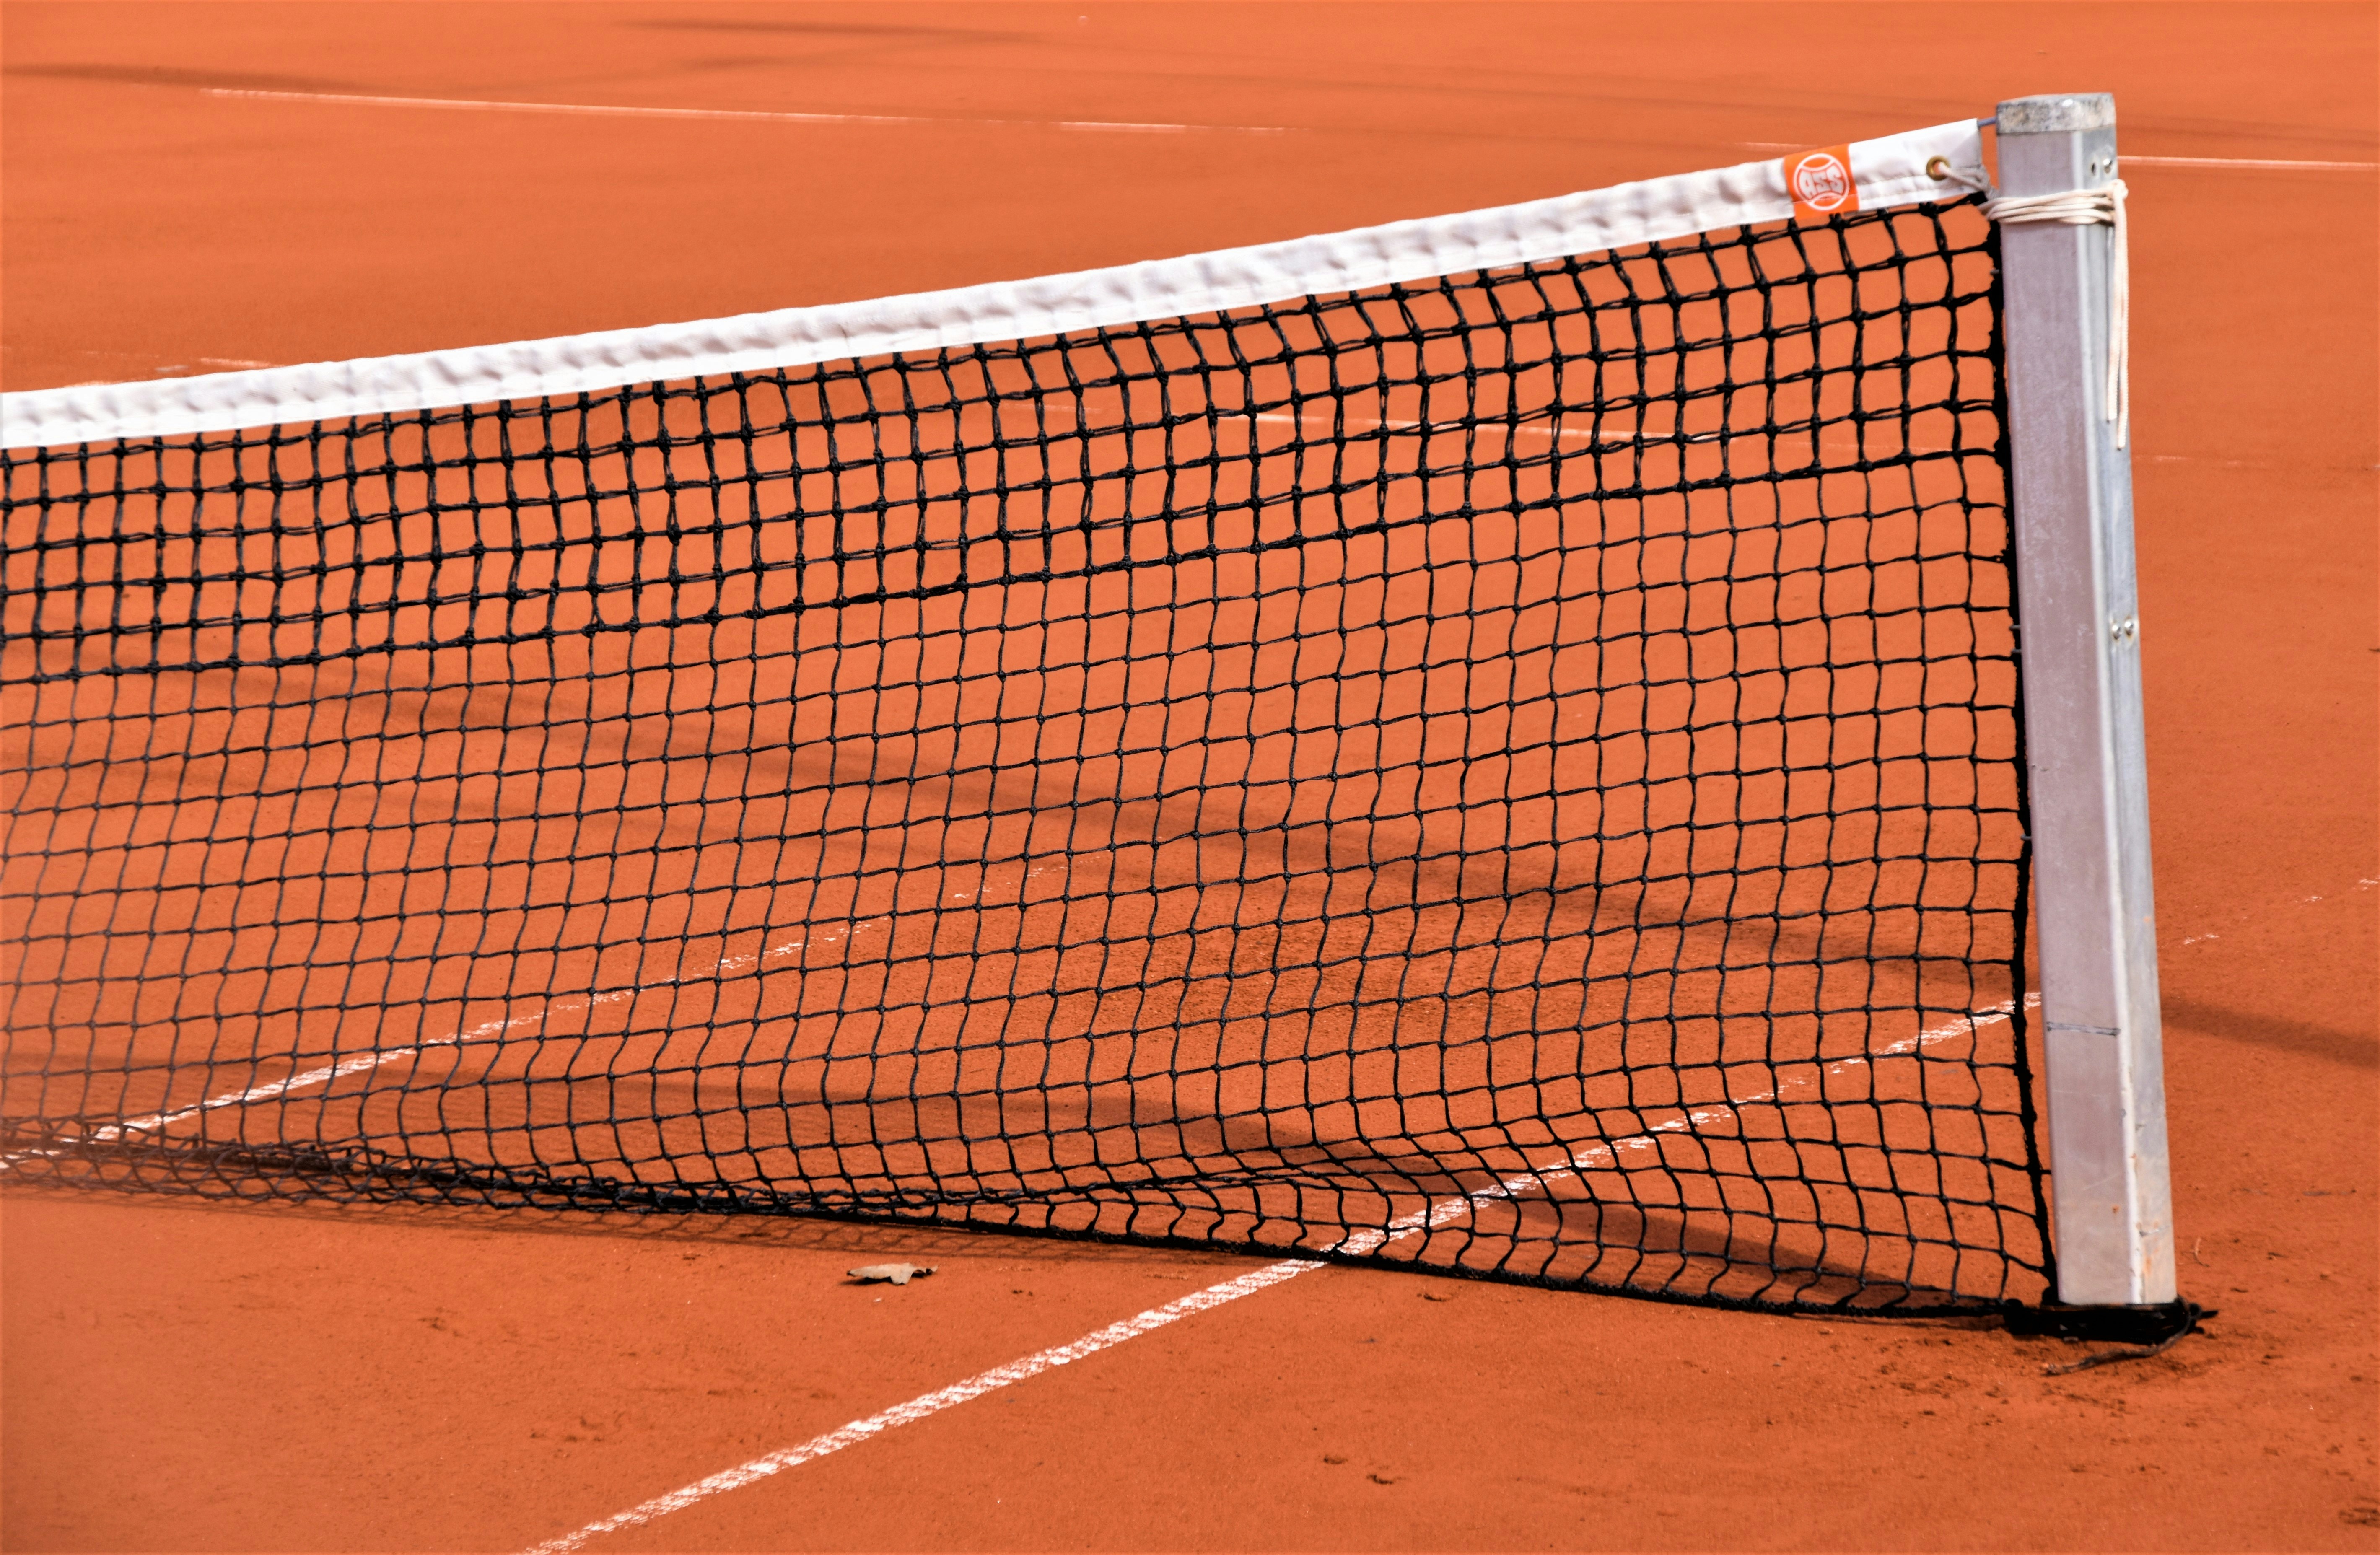 A tennis net during the winter season